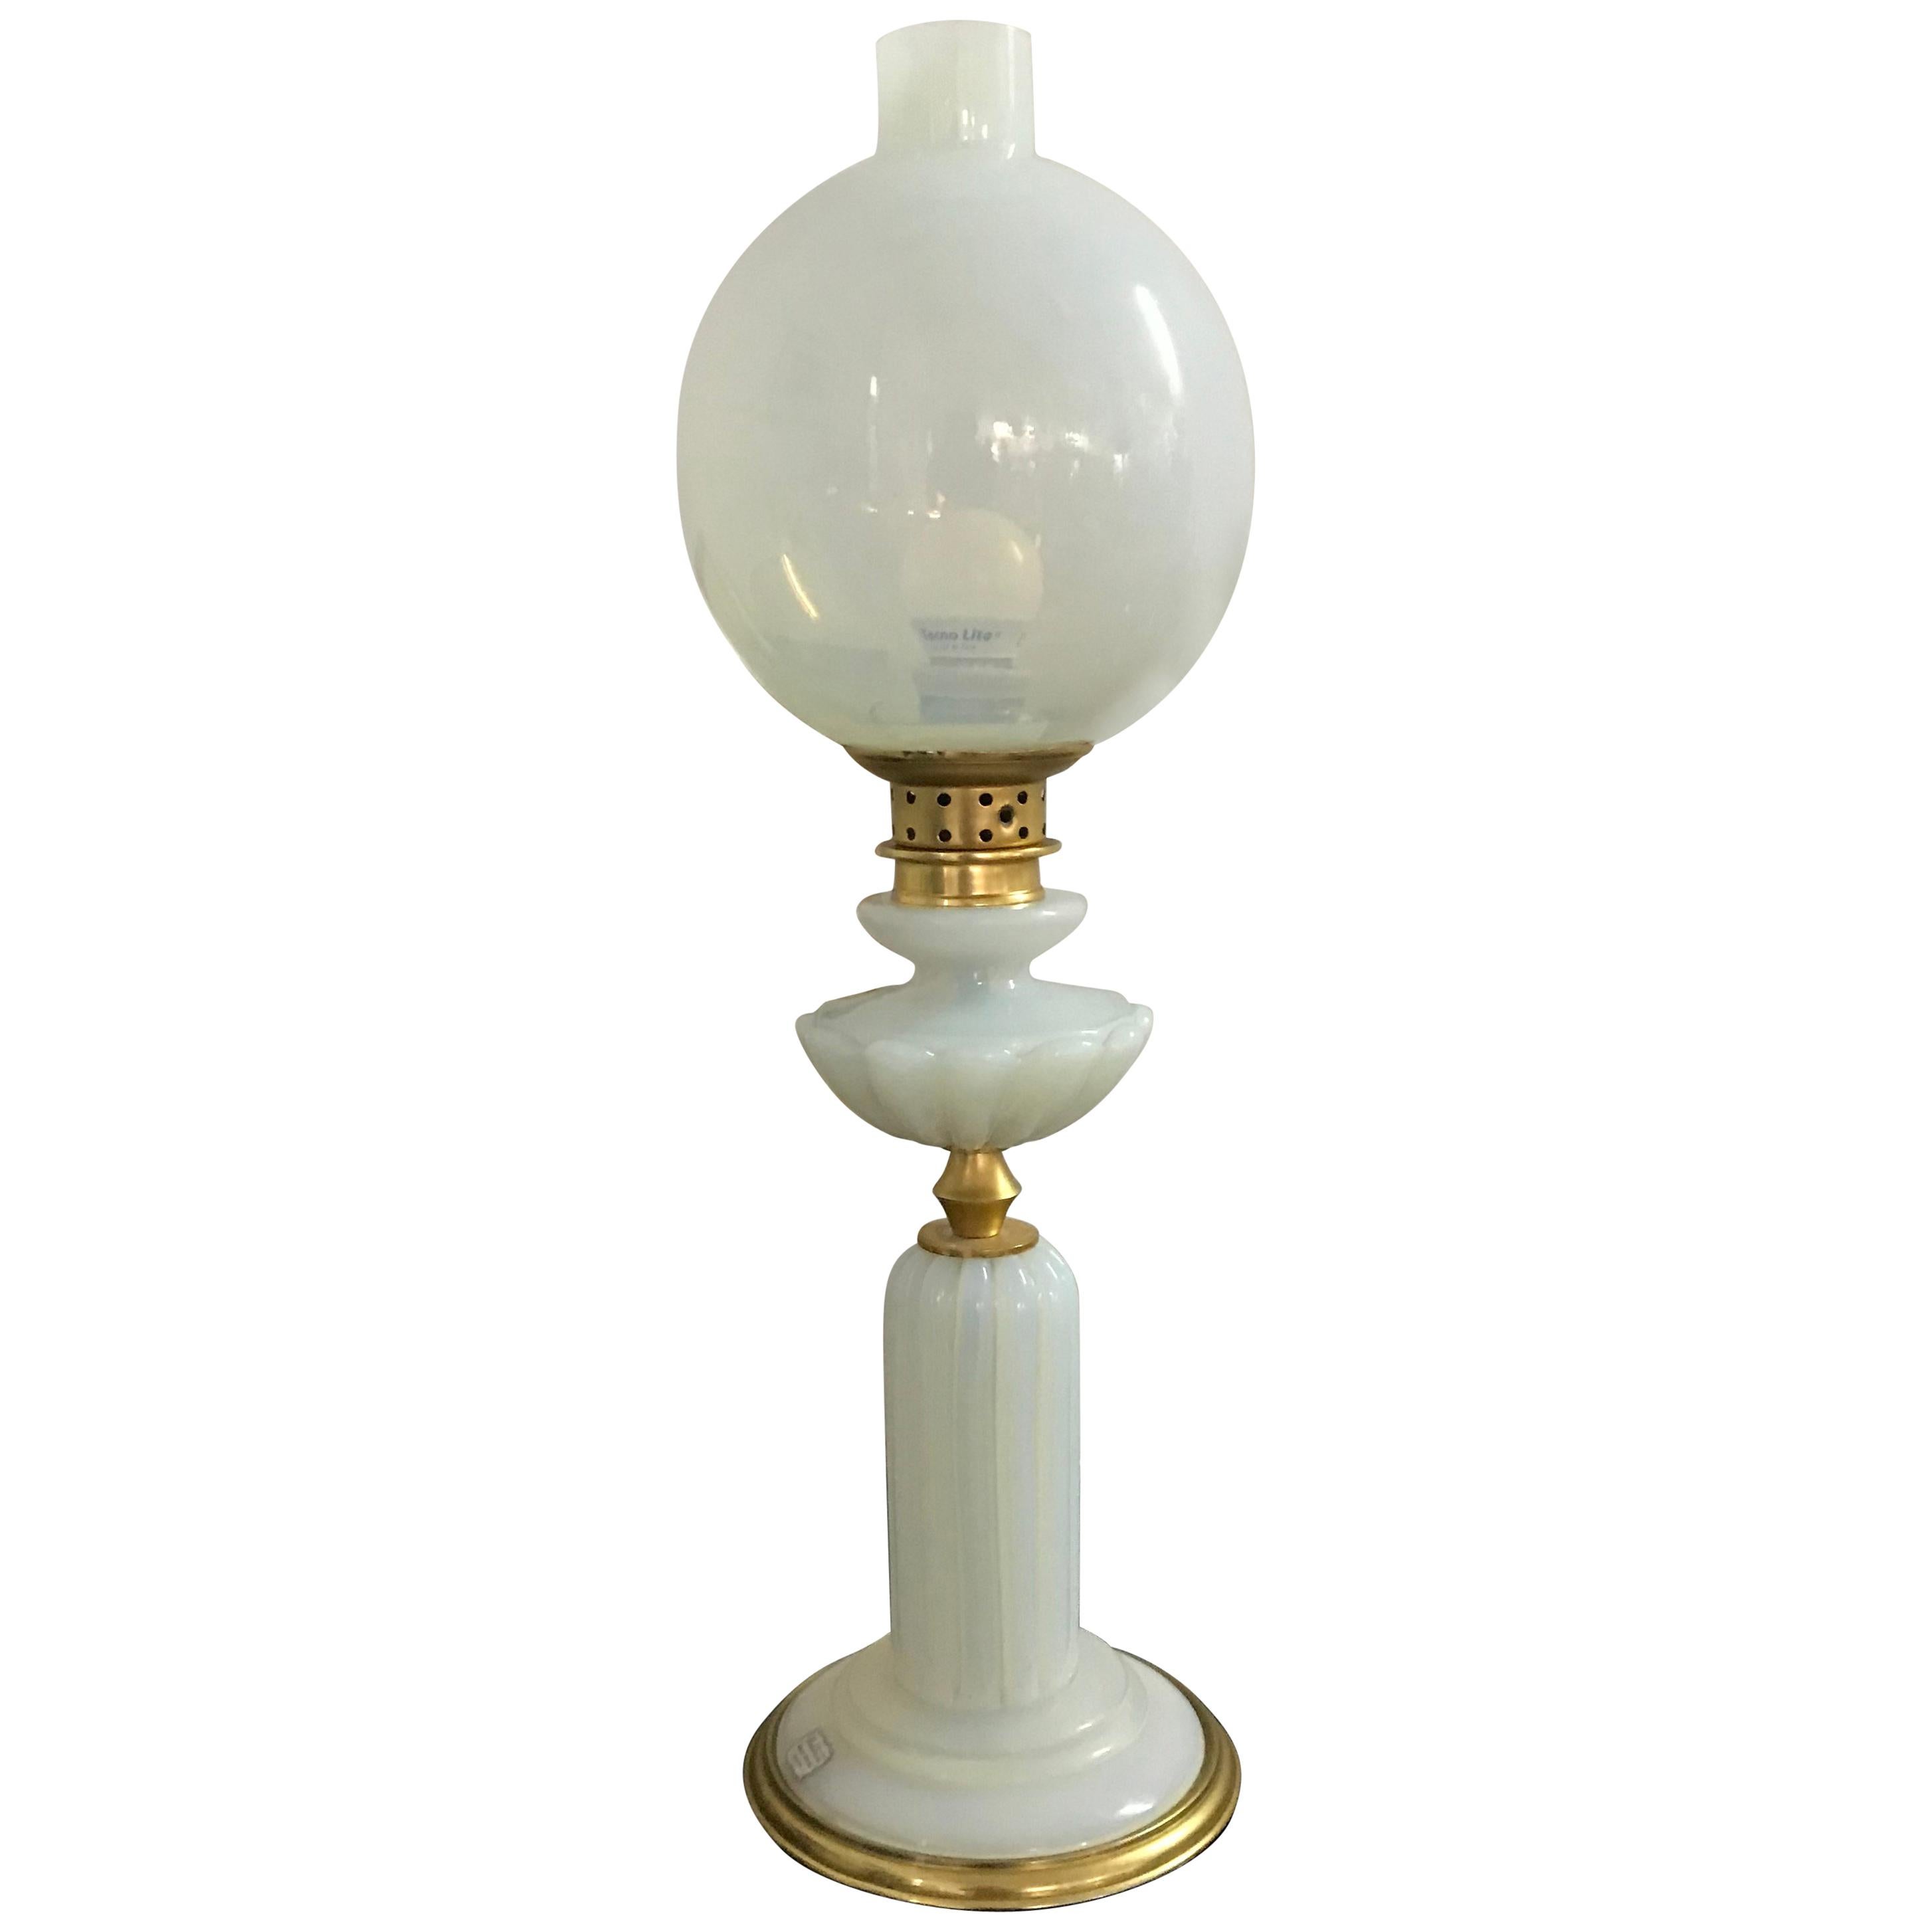 Lampe de table Art Déco en verre de Murano, attribuée à Barovier et Toso, vers 1940